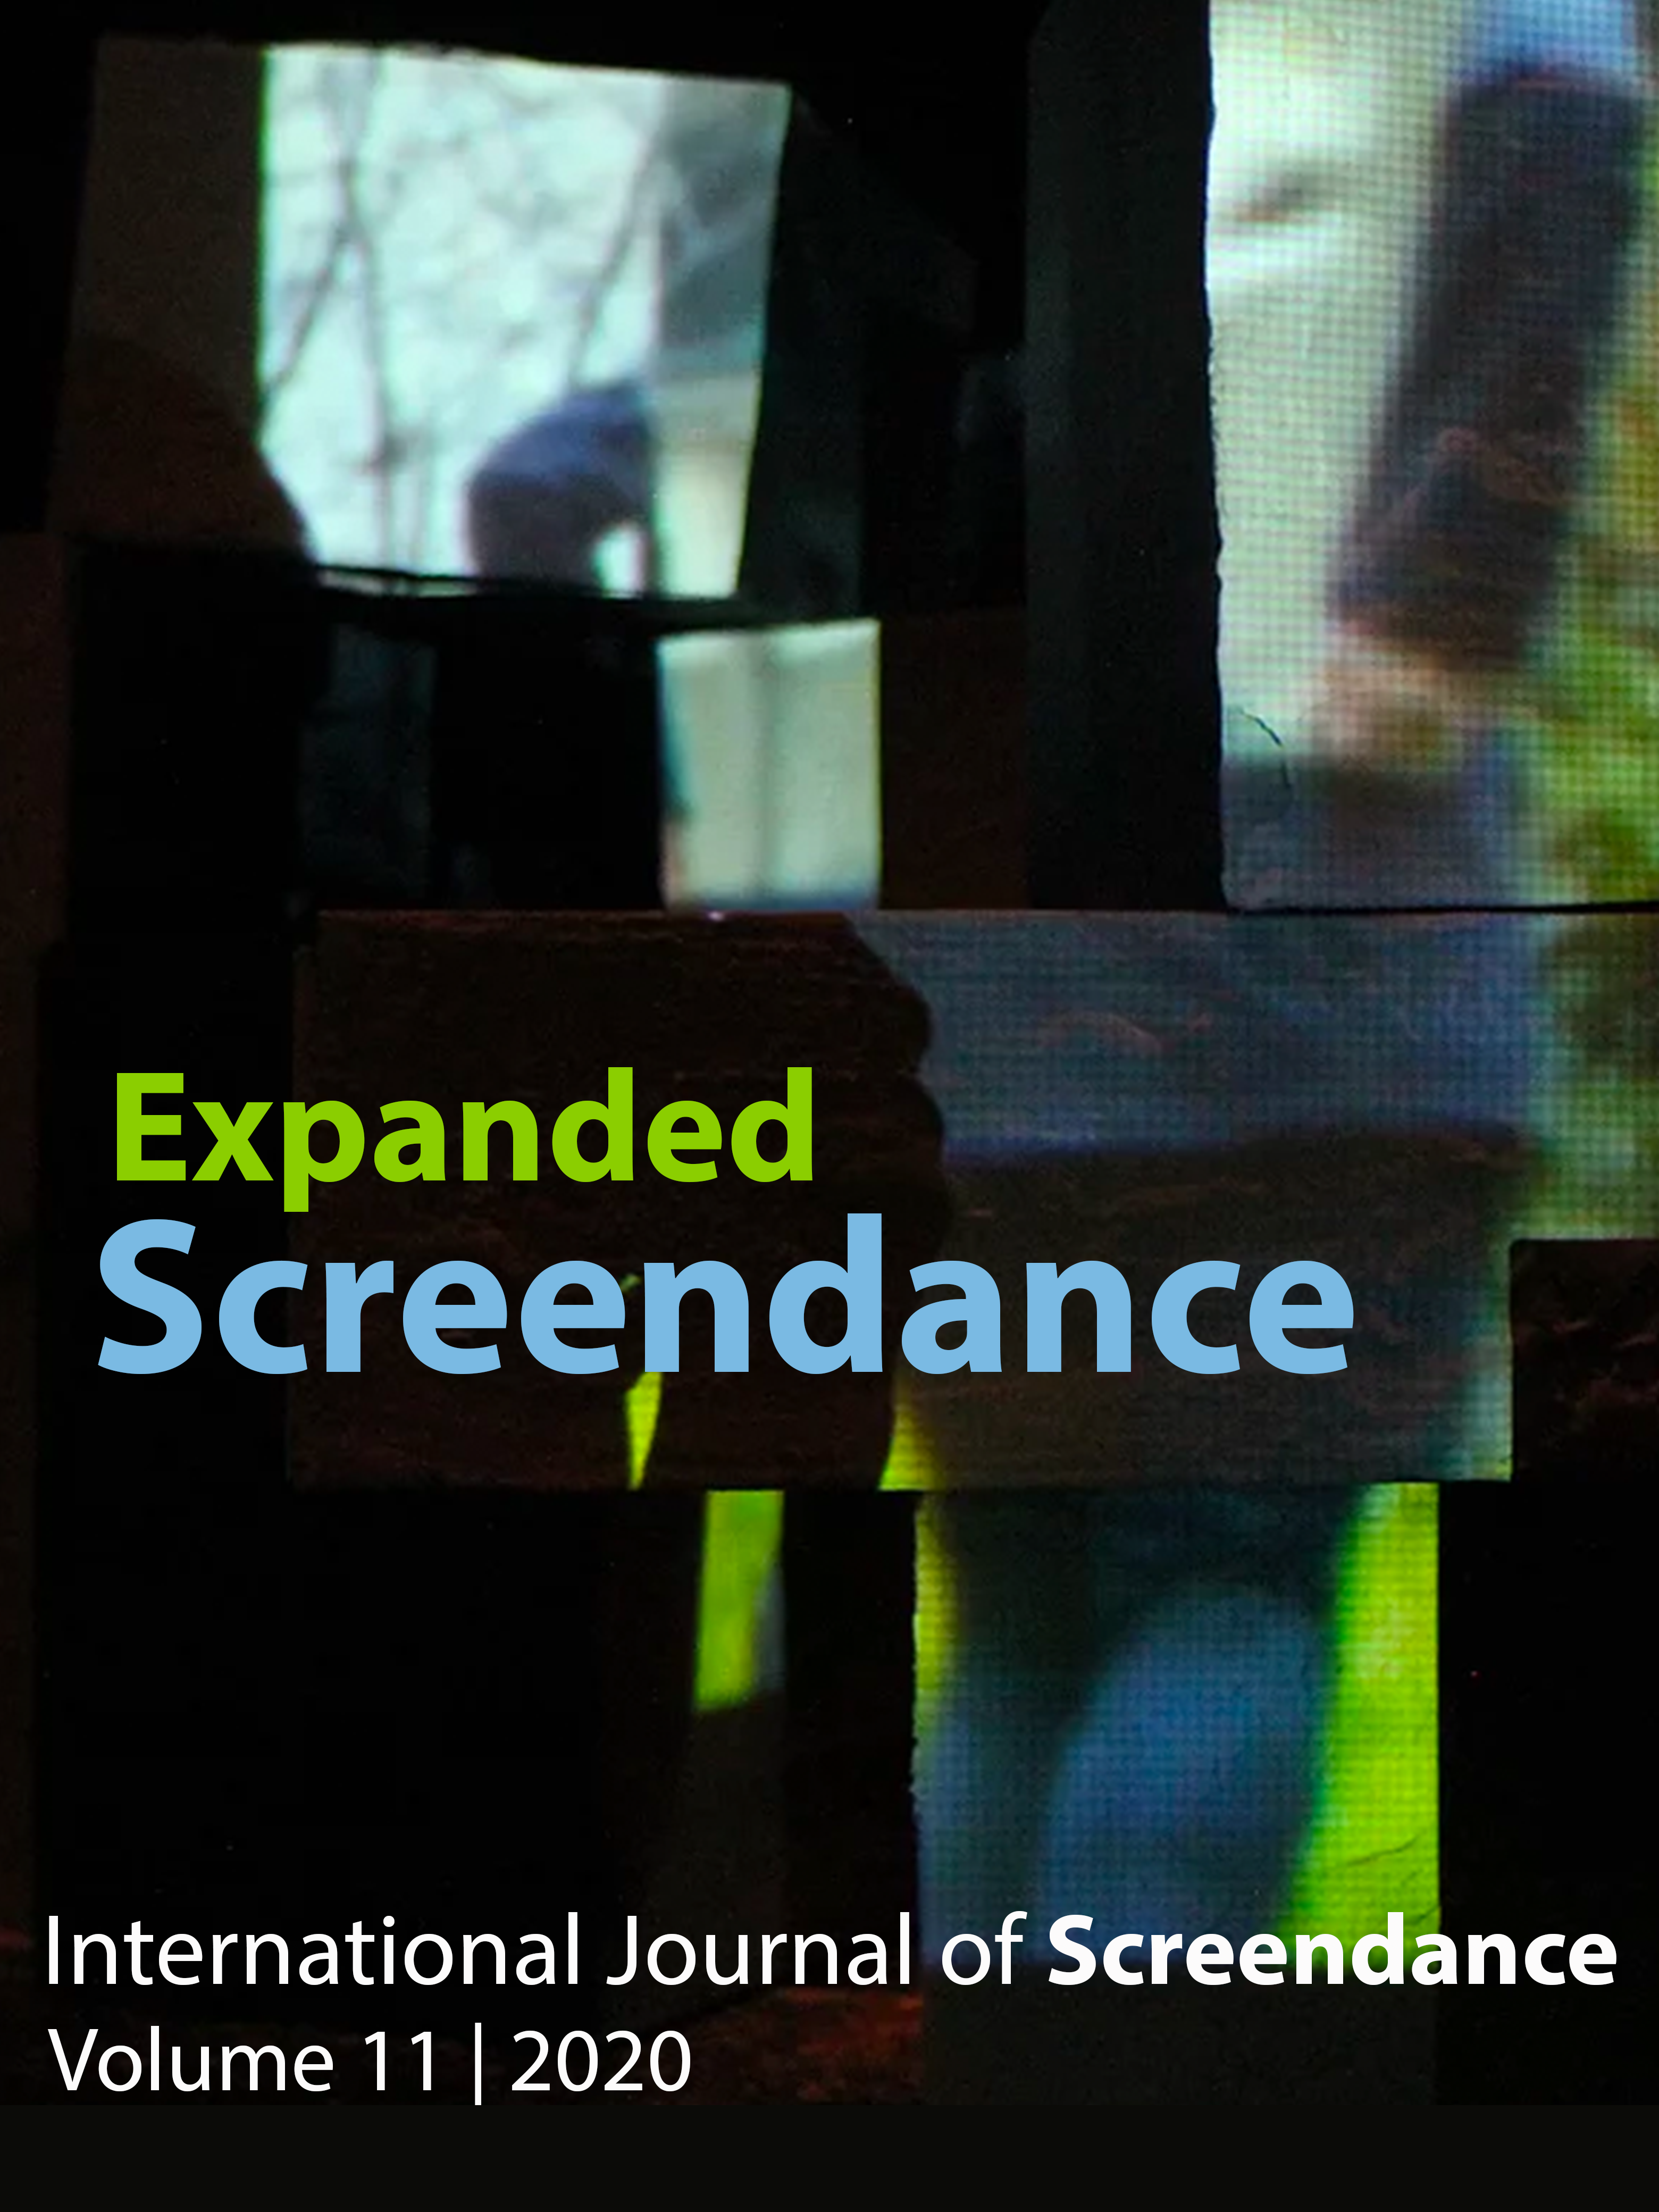 Expanded Screendance: International Journal of Screendance Volume 11 2020